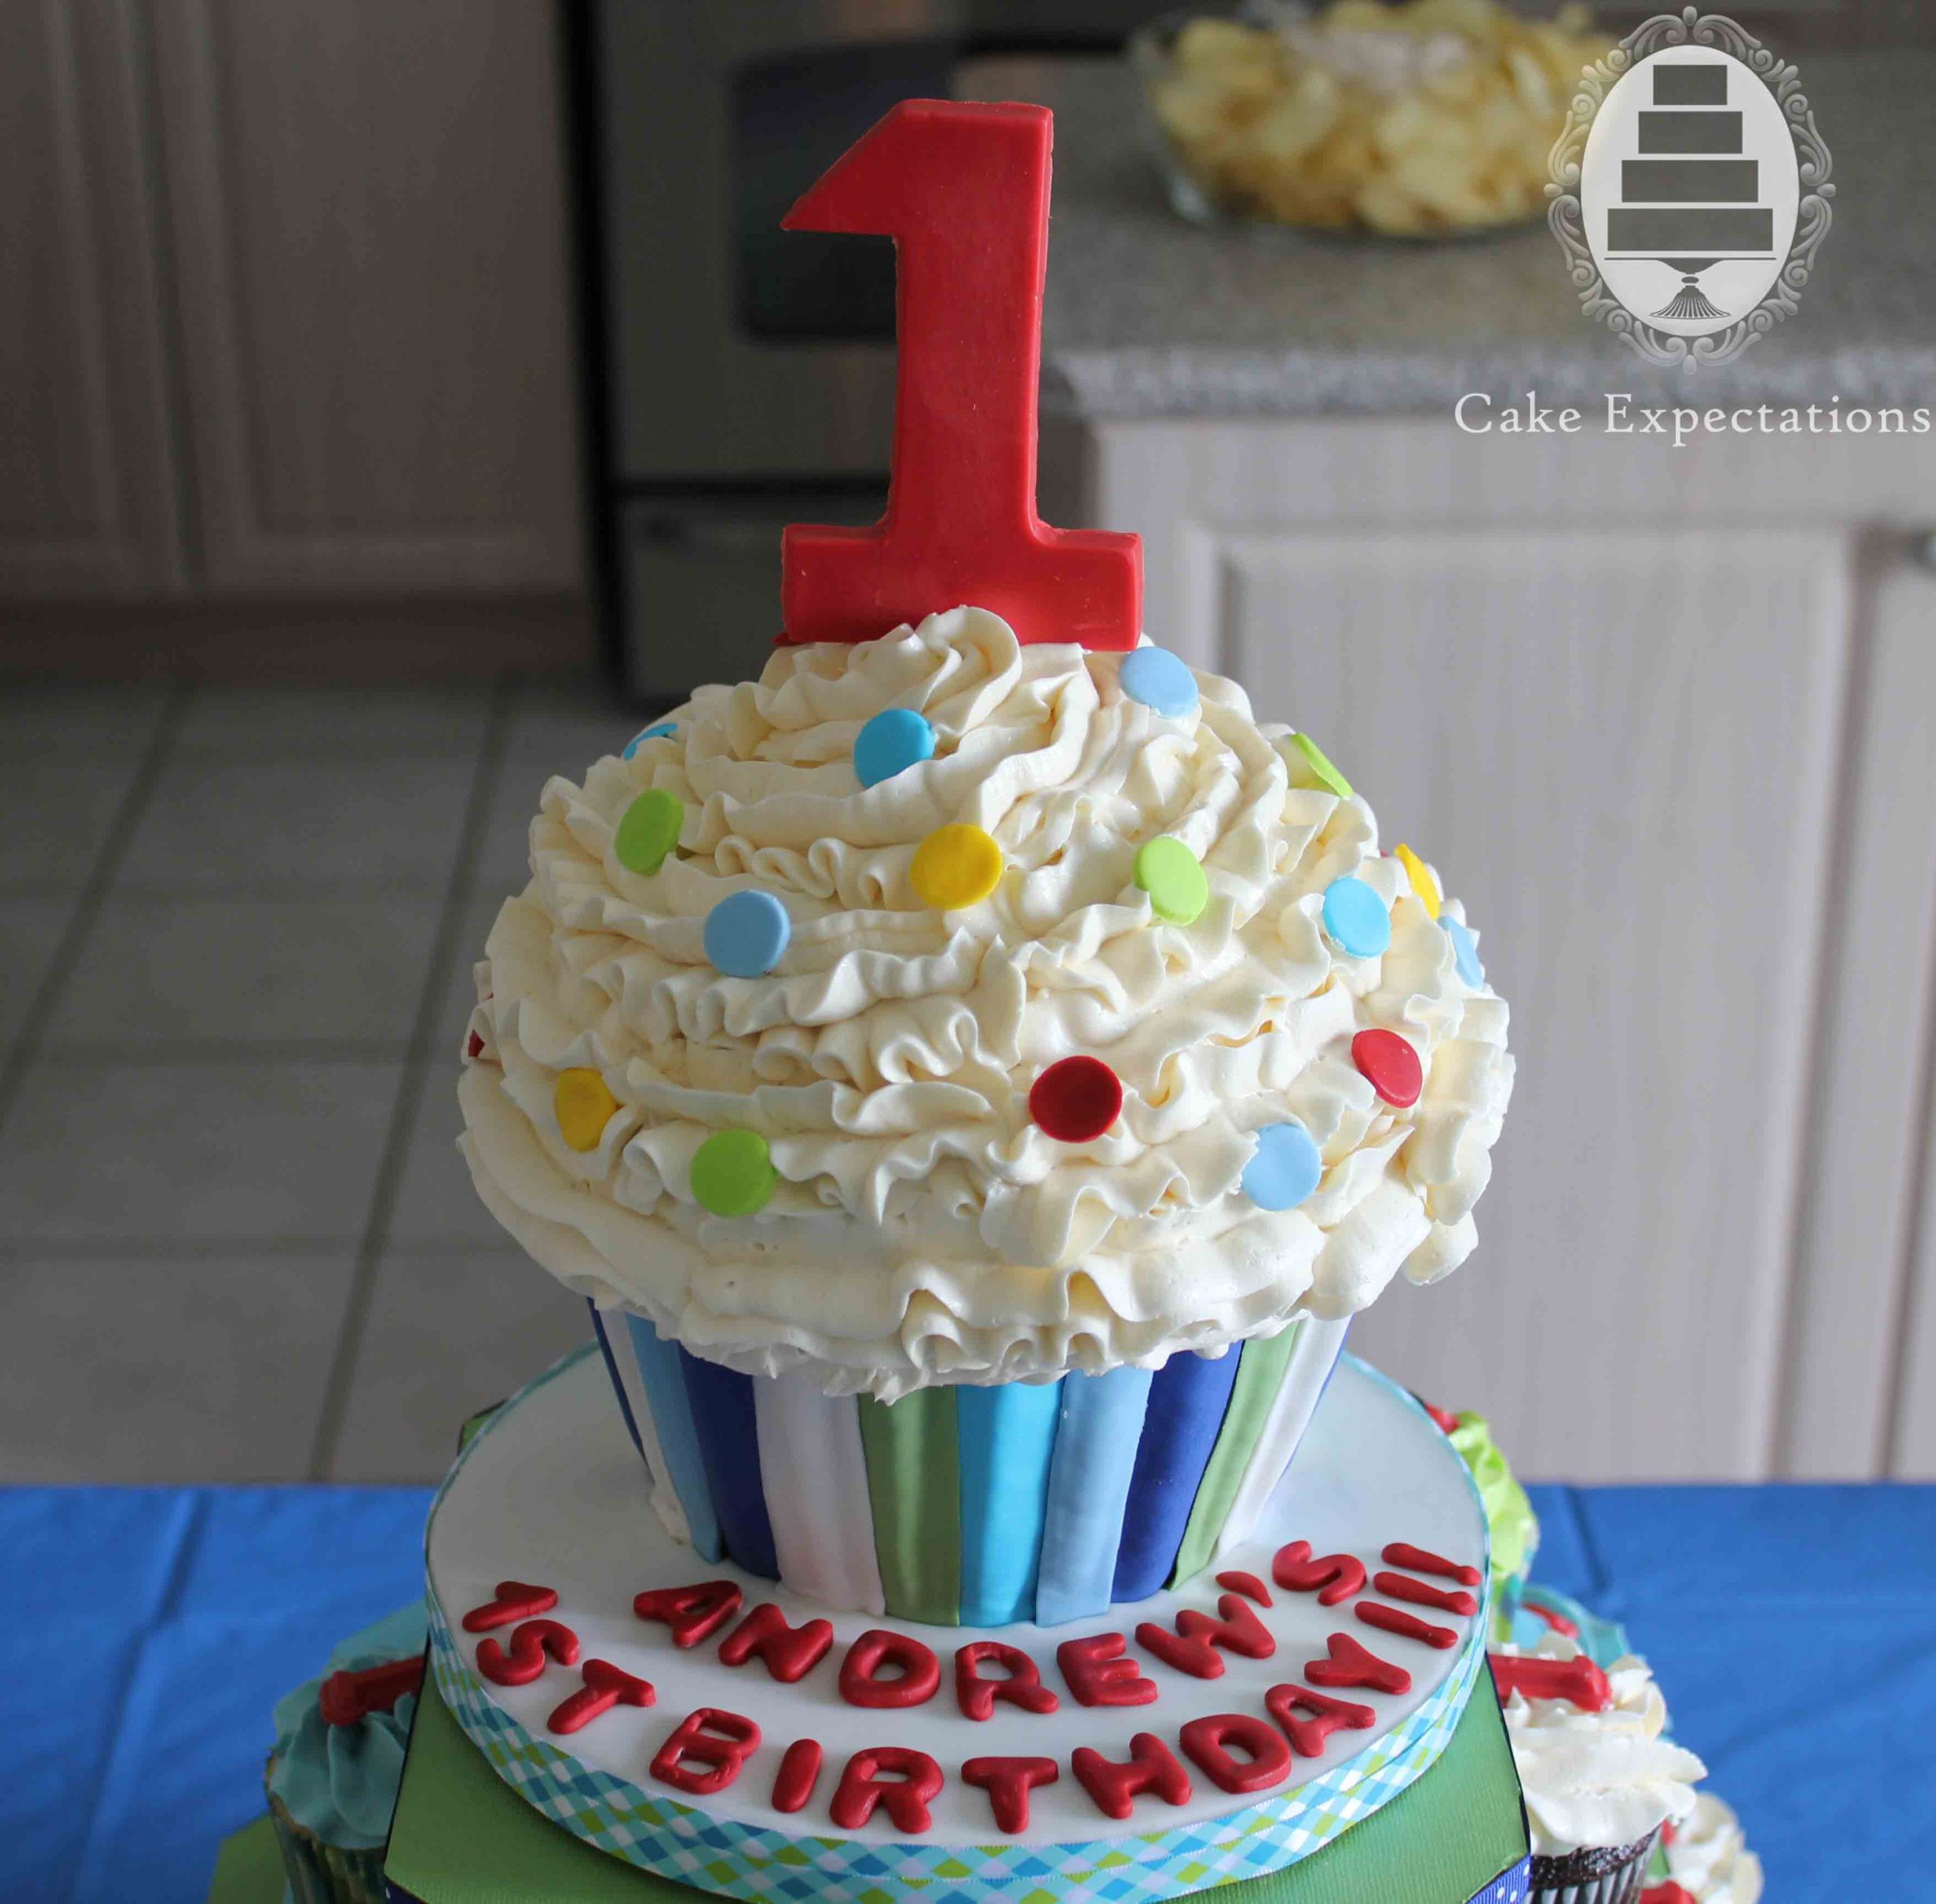 Cupcake Birthday Cakes
 Cake Expectations – Cupcakes